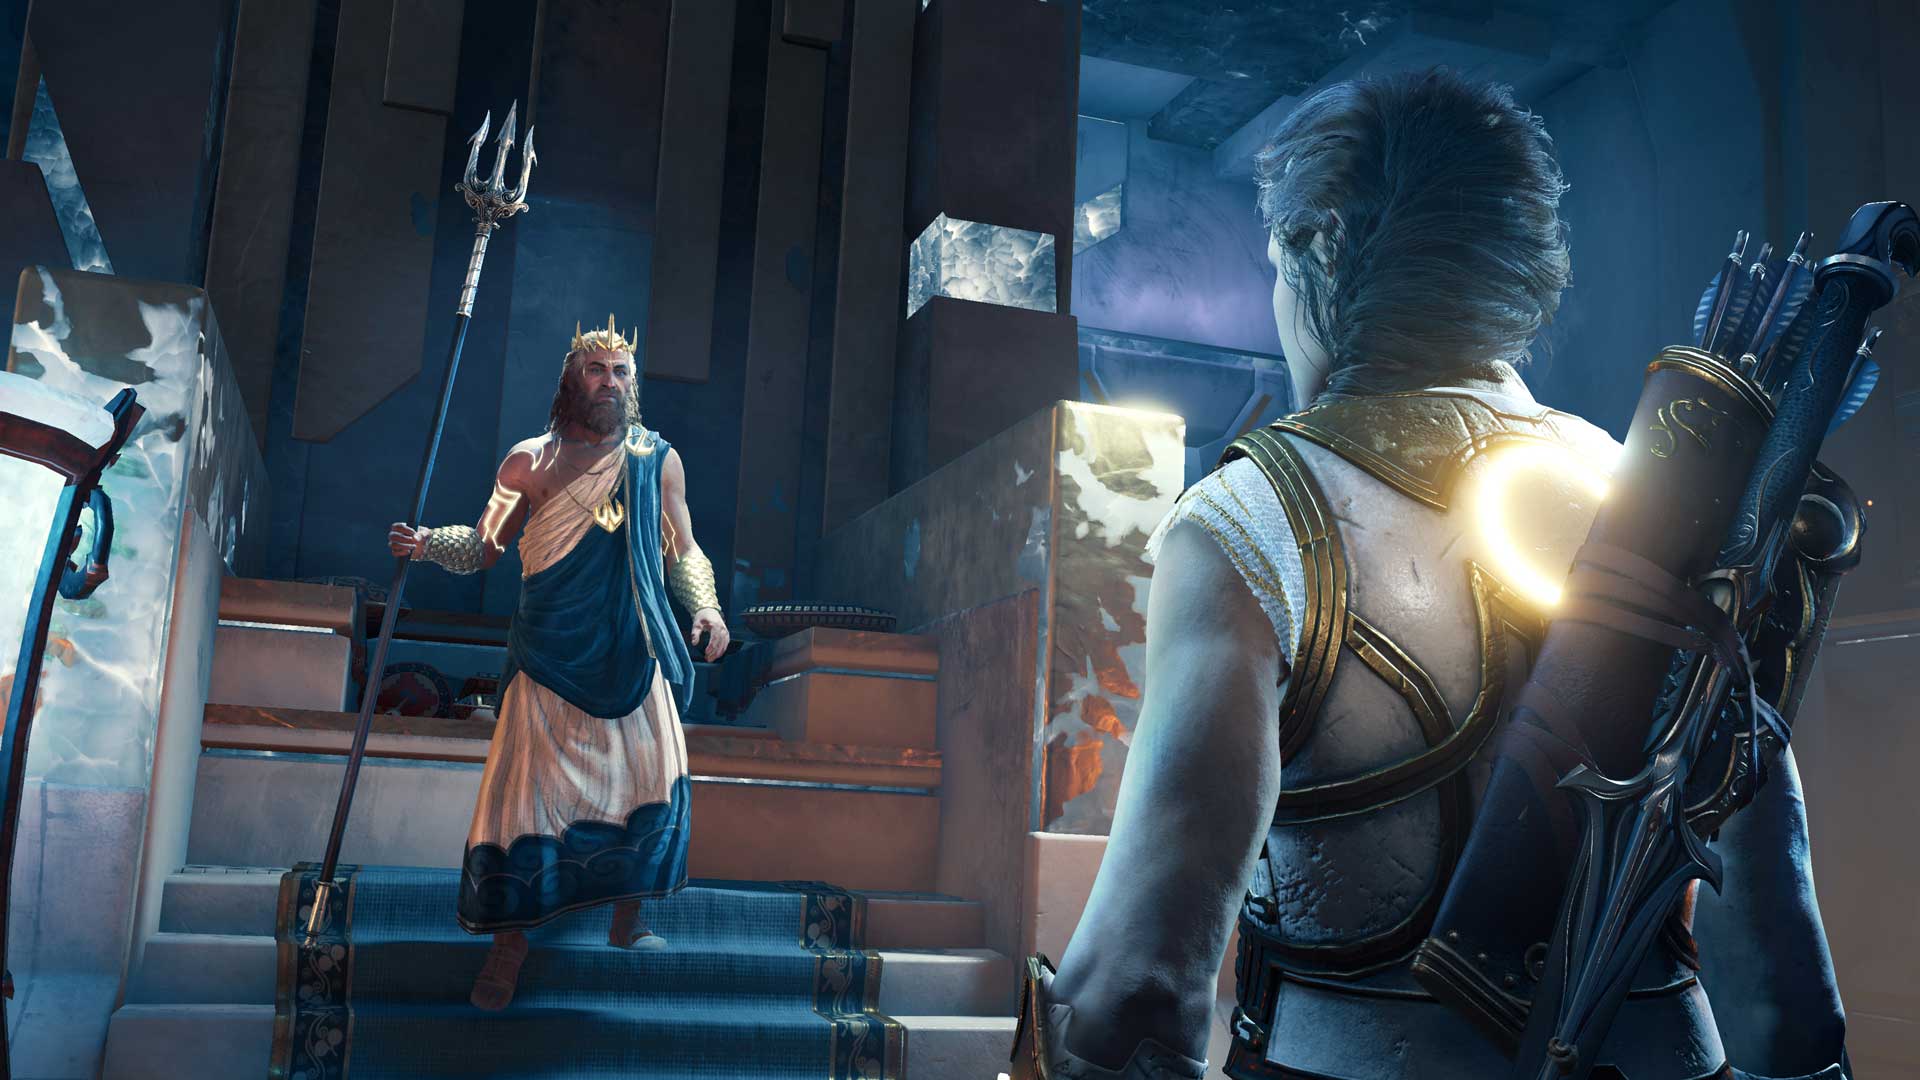 Fate of Atlantis Assassin's Creed Odyssey DLC